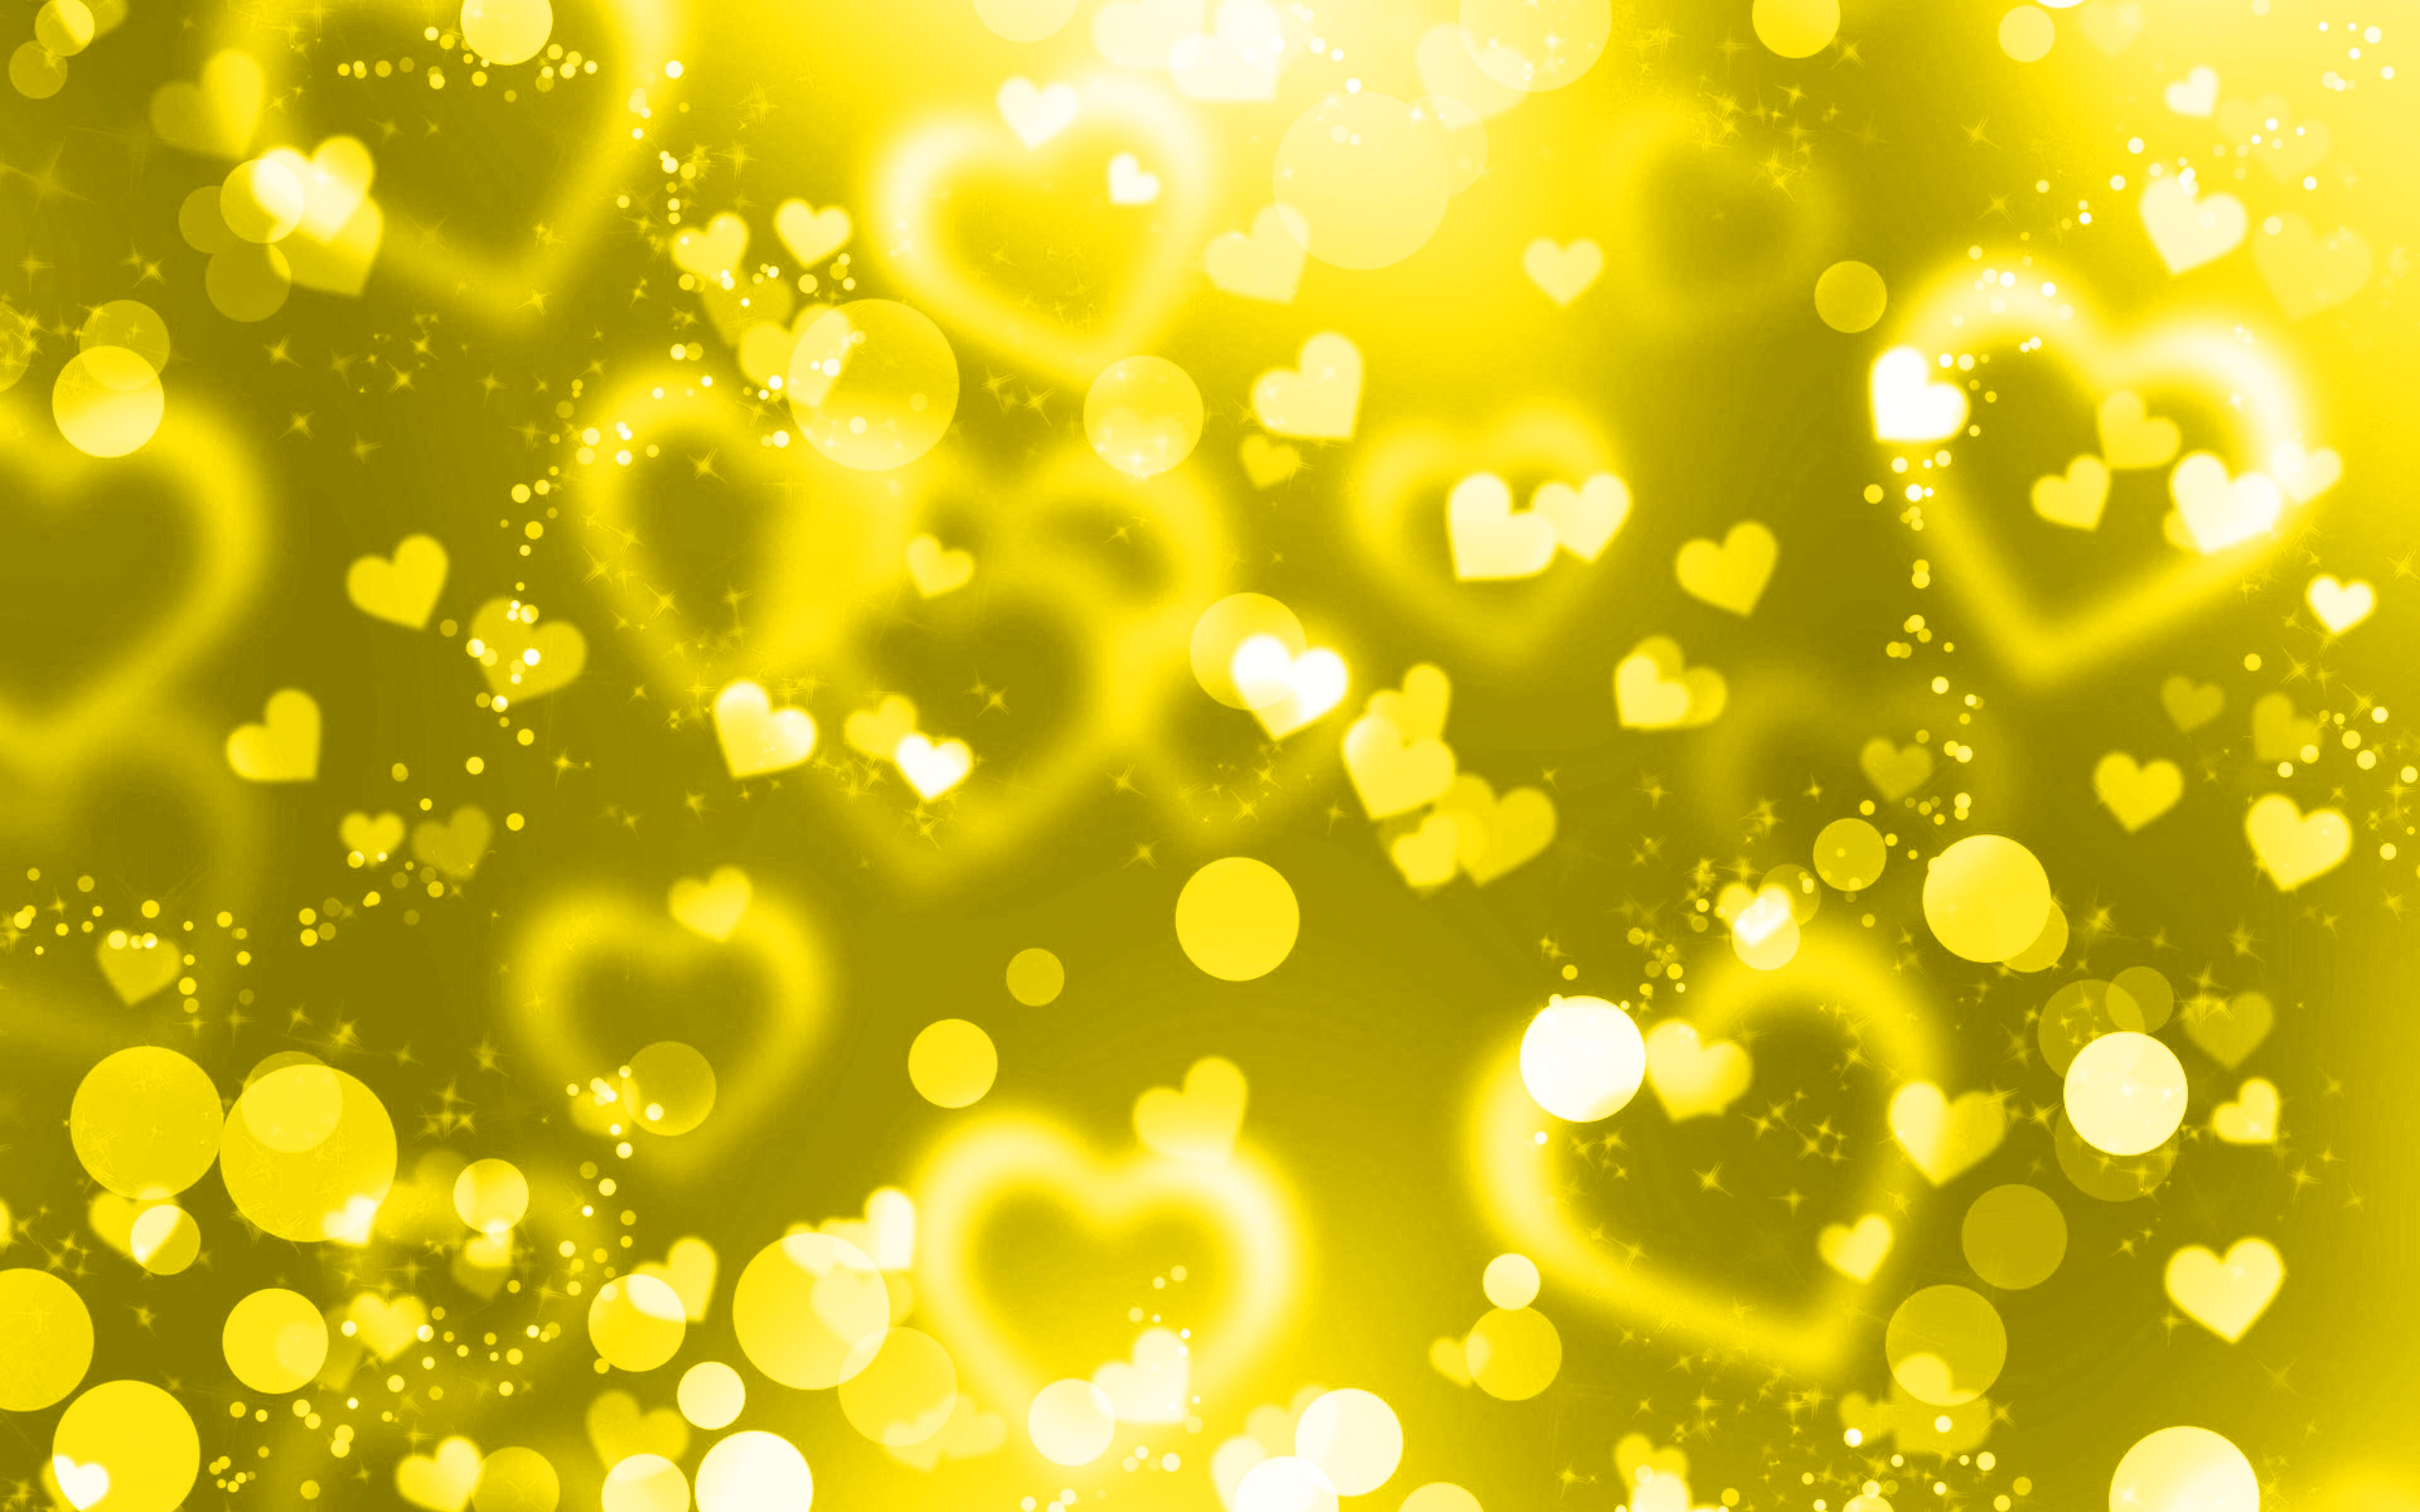 Download wallpaper yellow glare hearts, 4k, yellow glitter